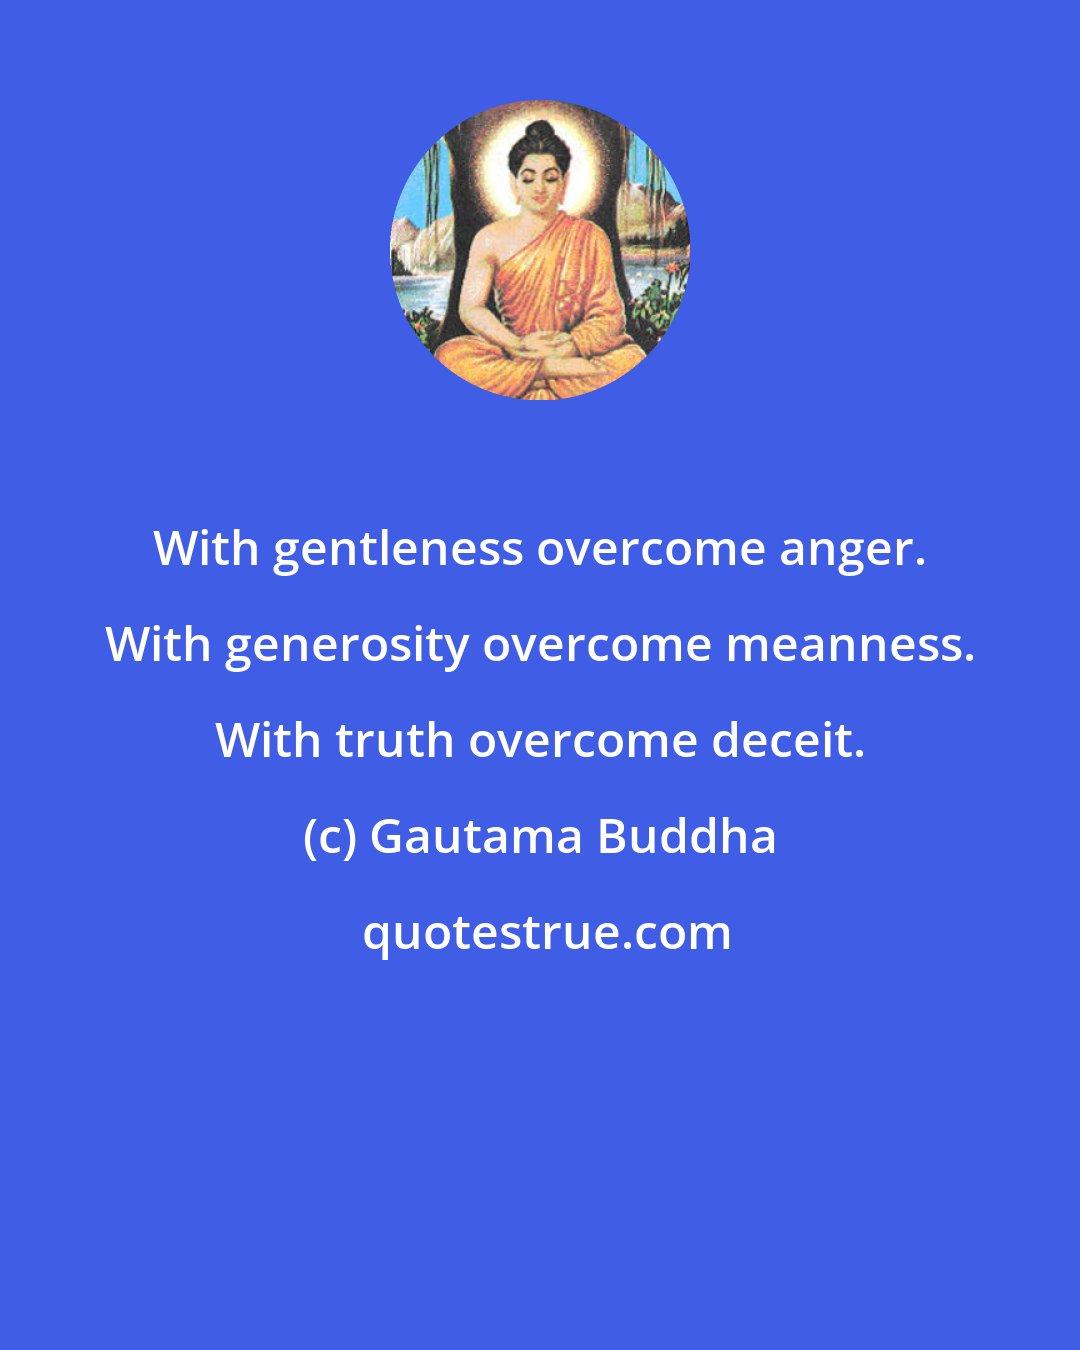 Gautama Buddha: With gentleness overcome anger. With generosity overcome meanness. With truth overcome deceit.